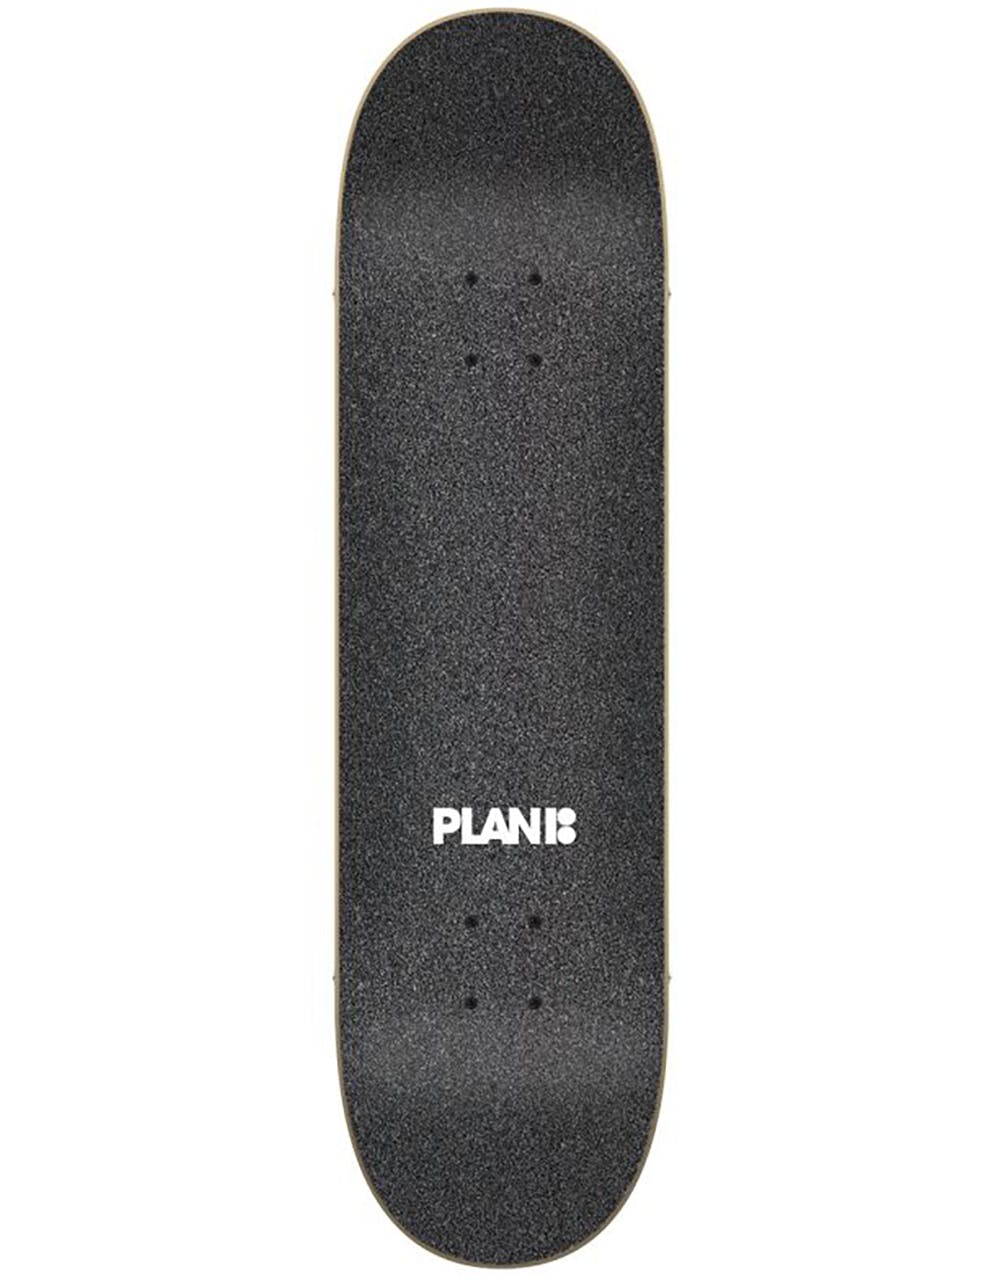 Plan B Team Multiverse Complete Skateboard - 7.75"